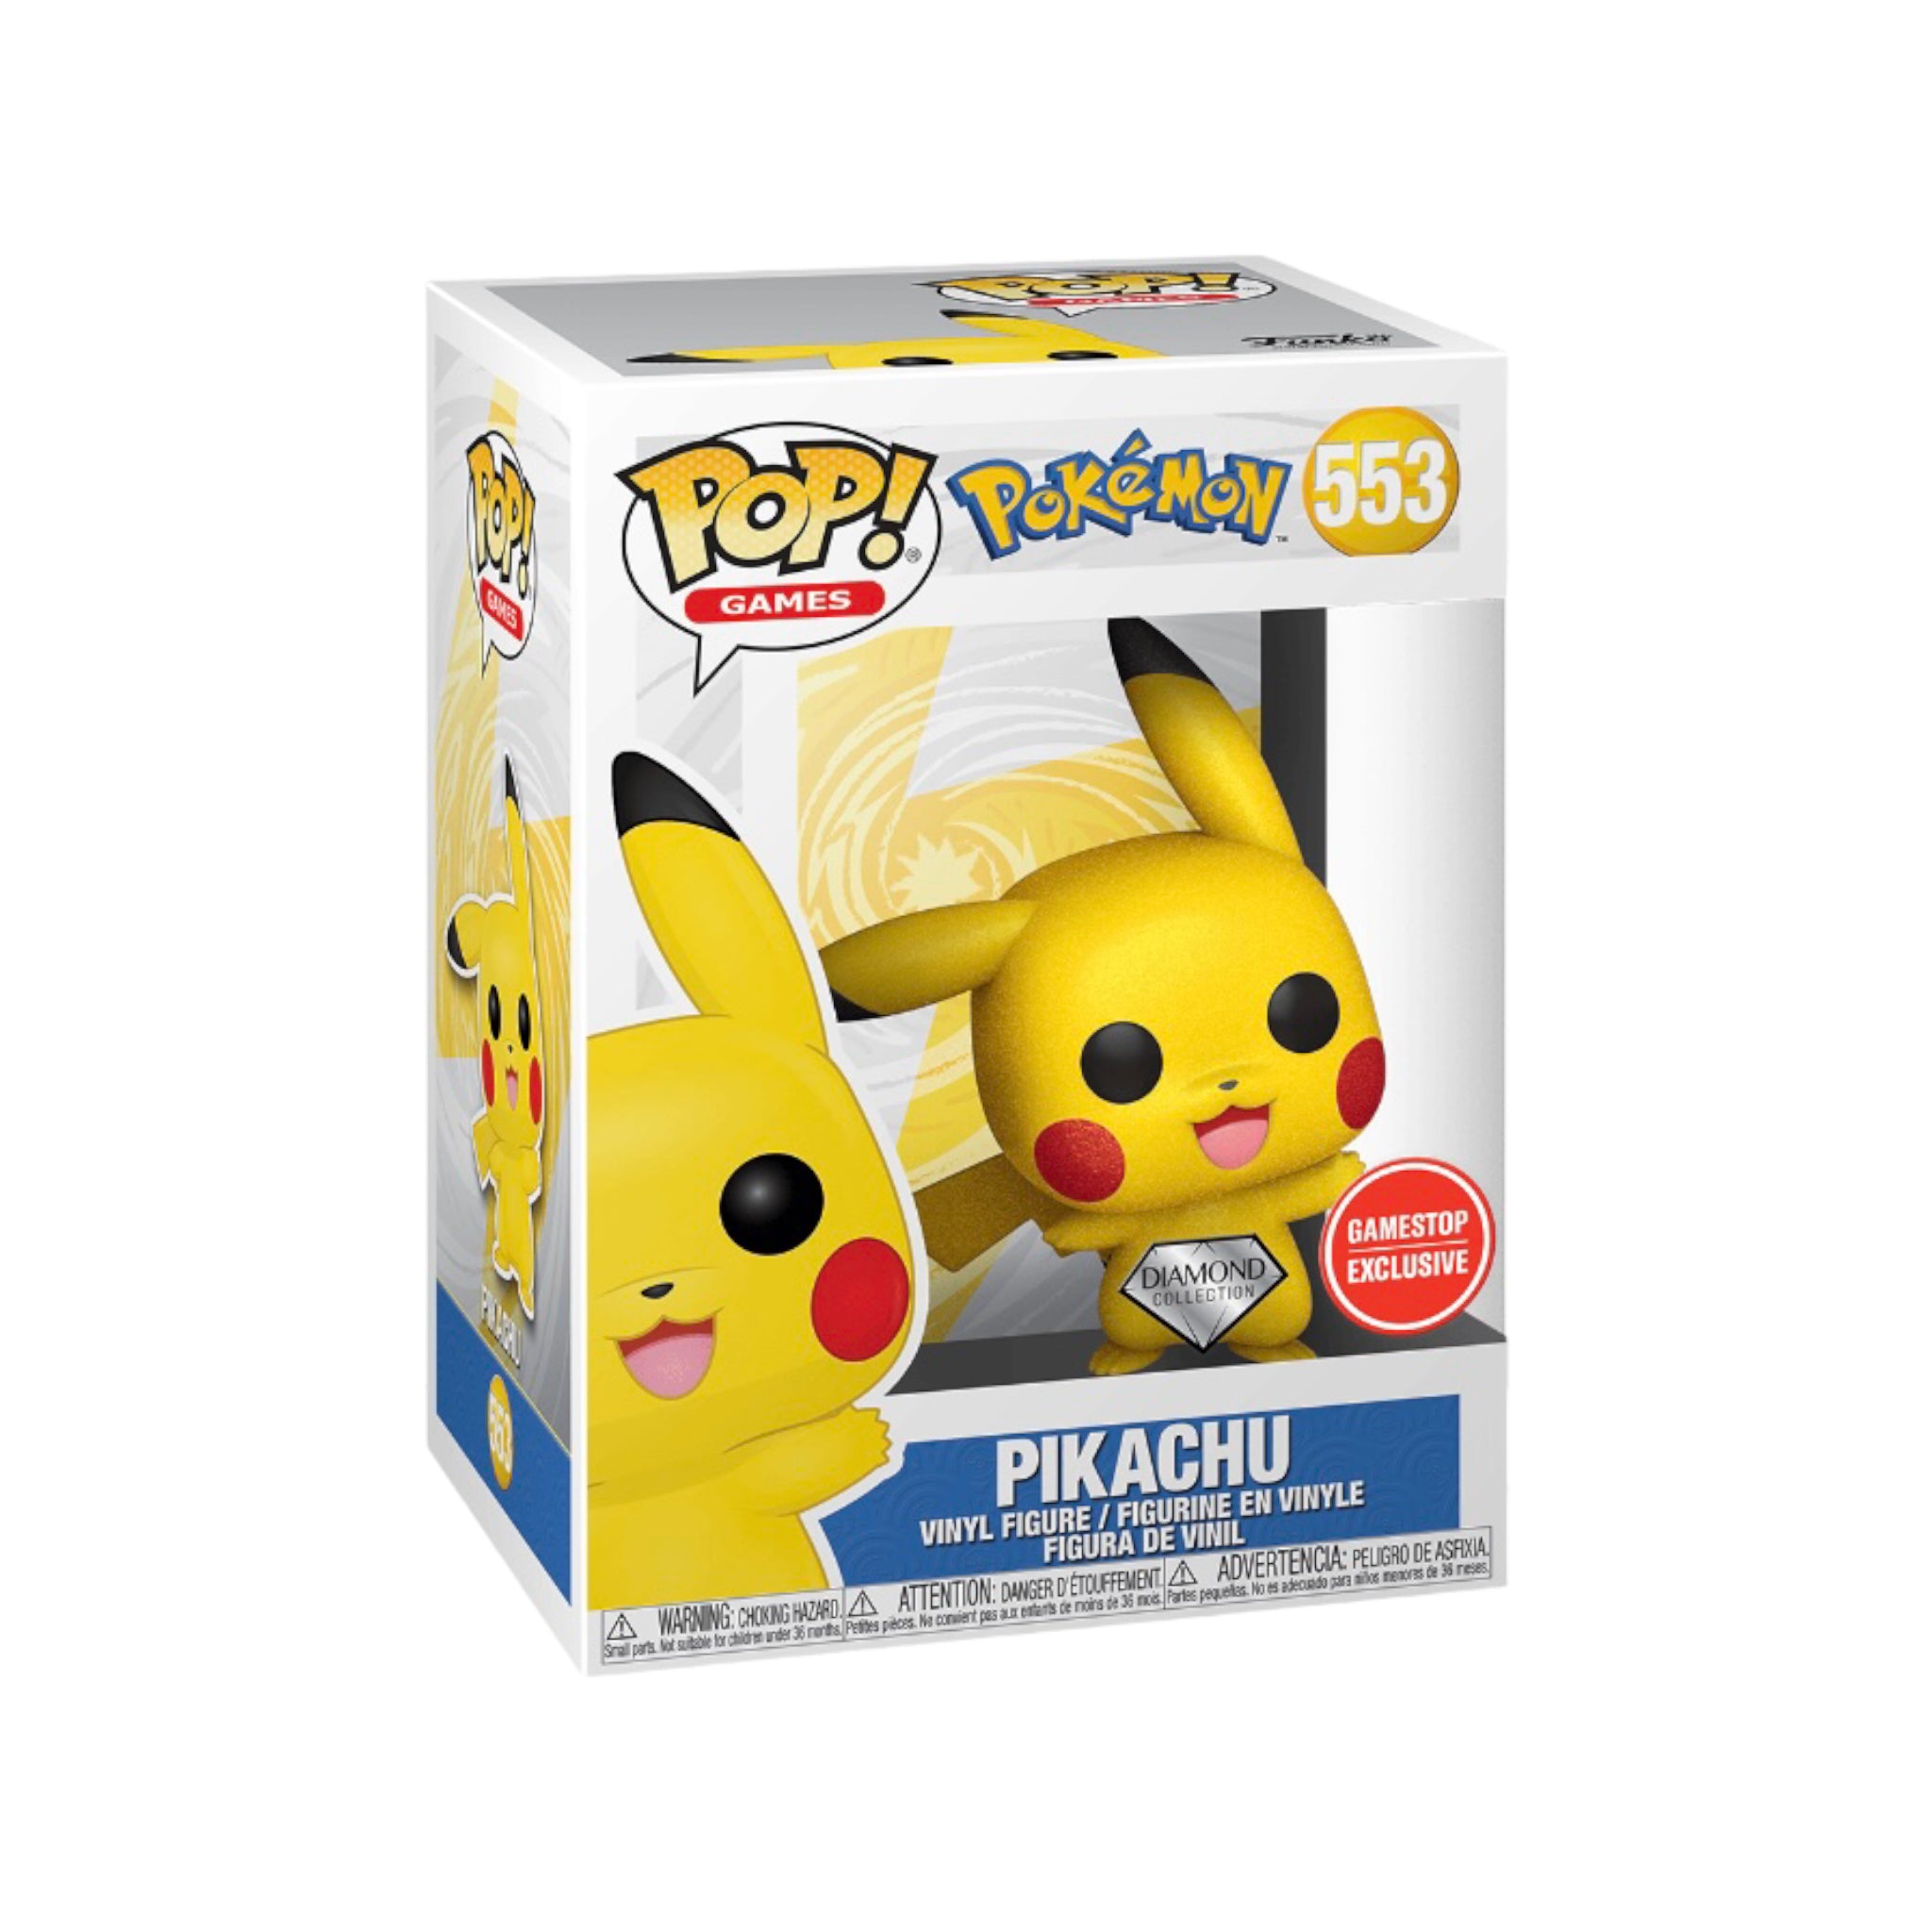 Pikachu #553 (Diamond Collection) Funko Pop! - Pokémon - GameStop Exclusive